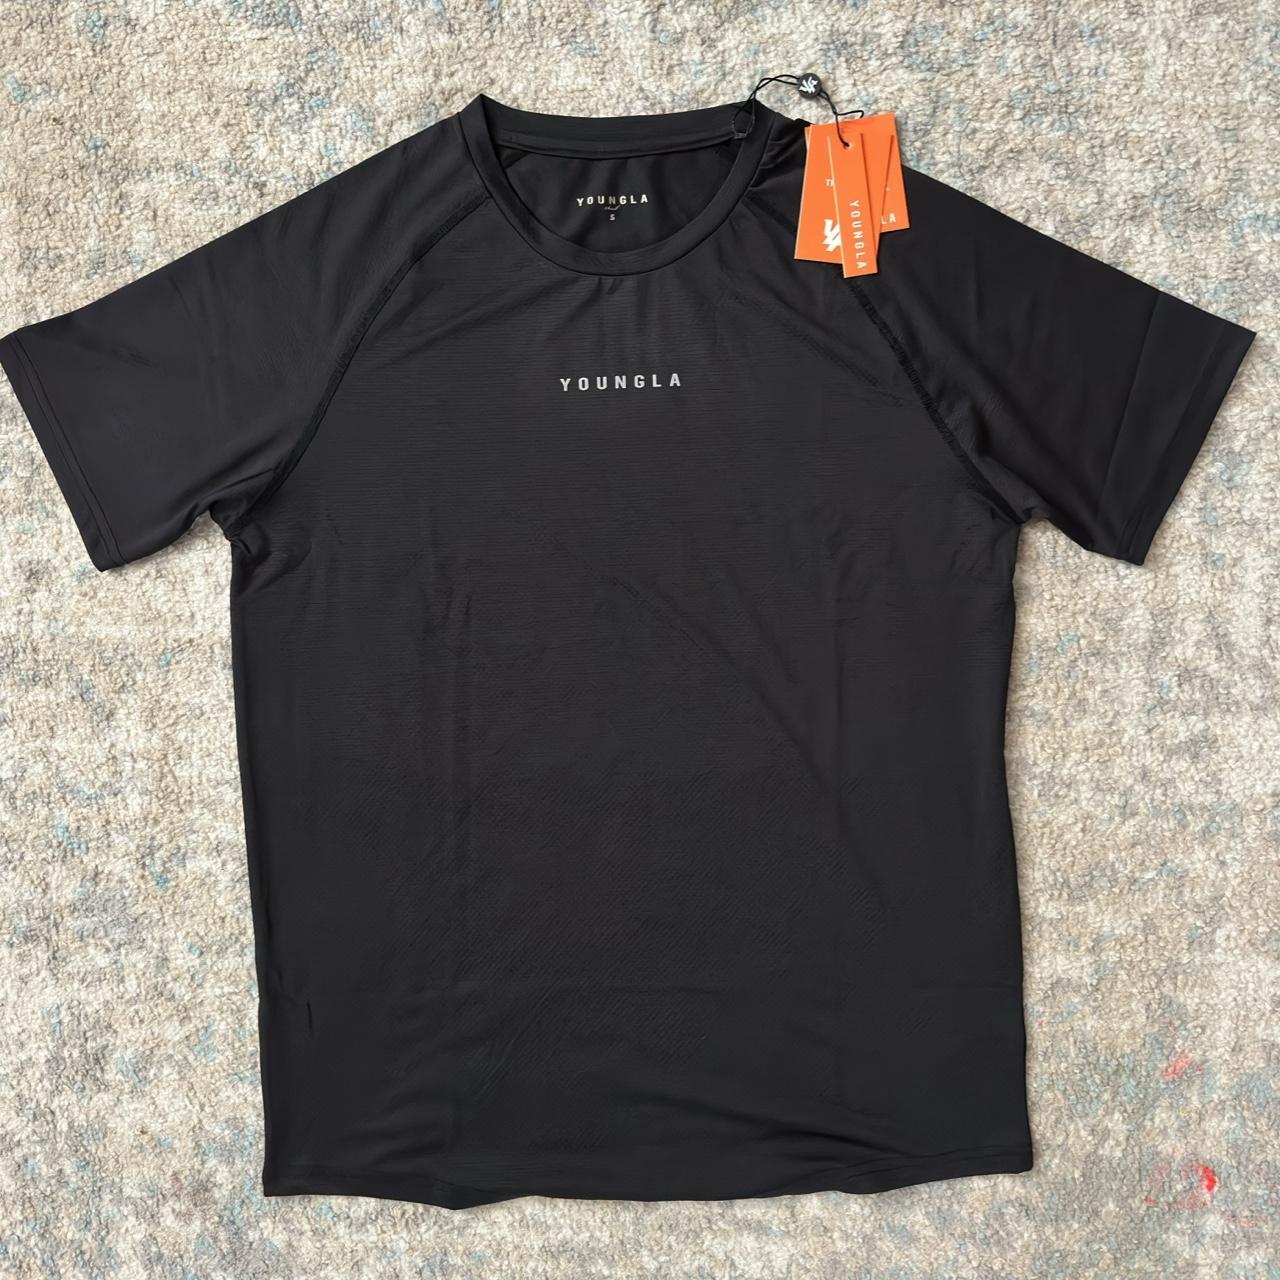 youngla compression shirt brand new black size s - Depop